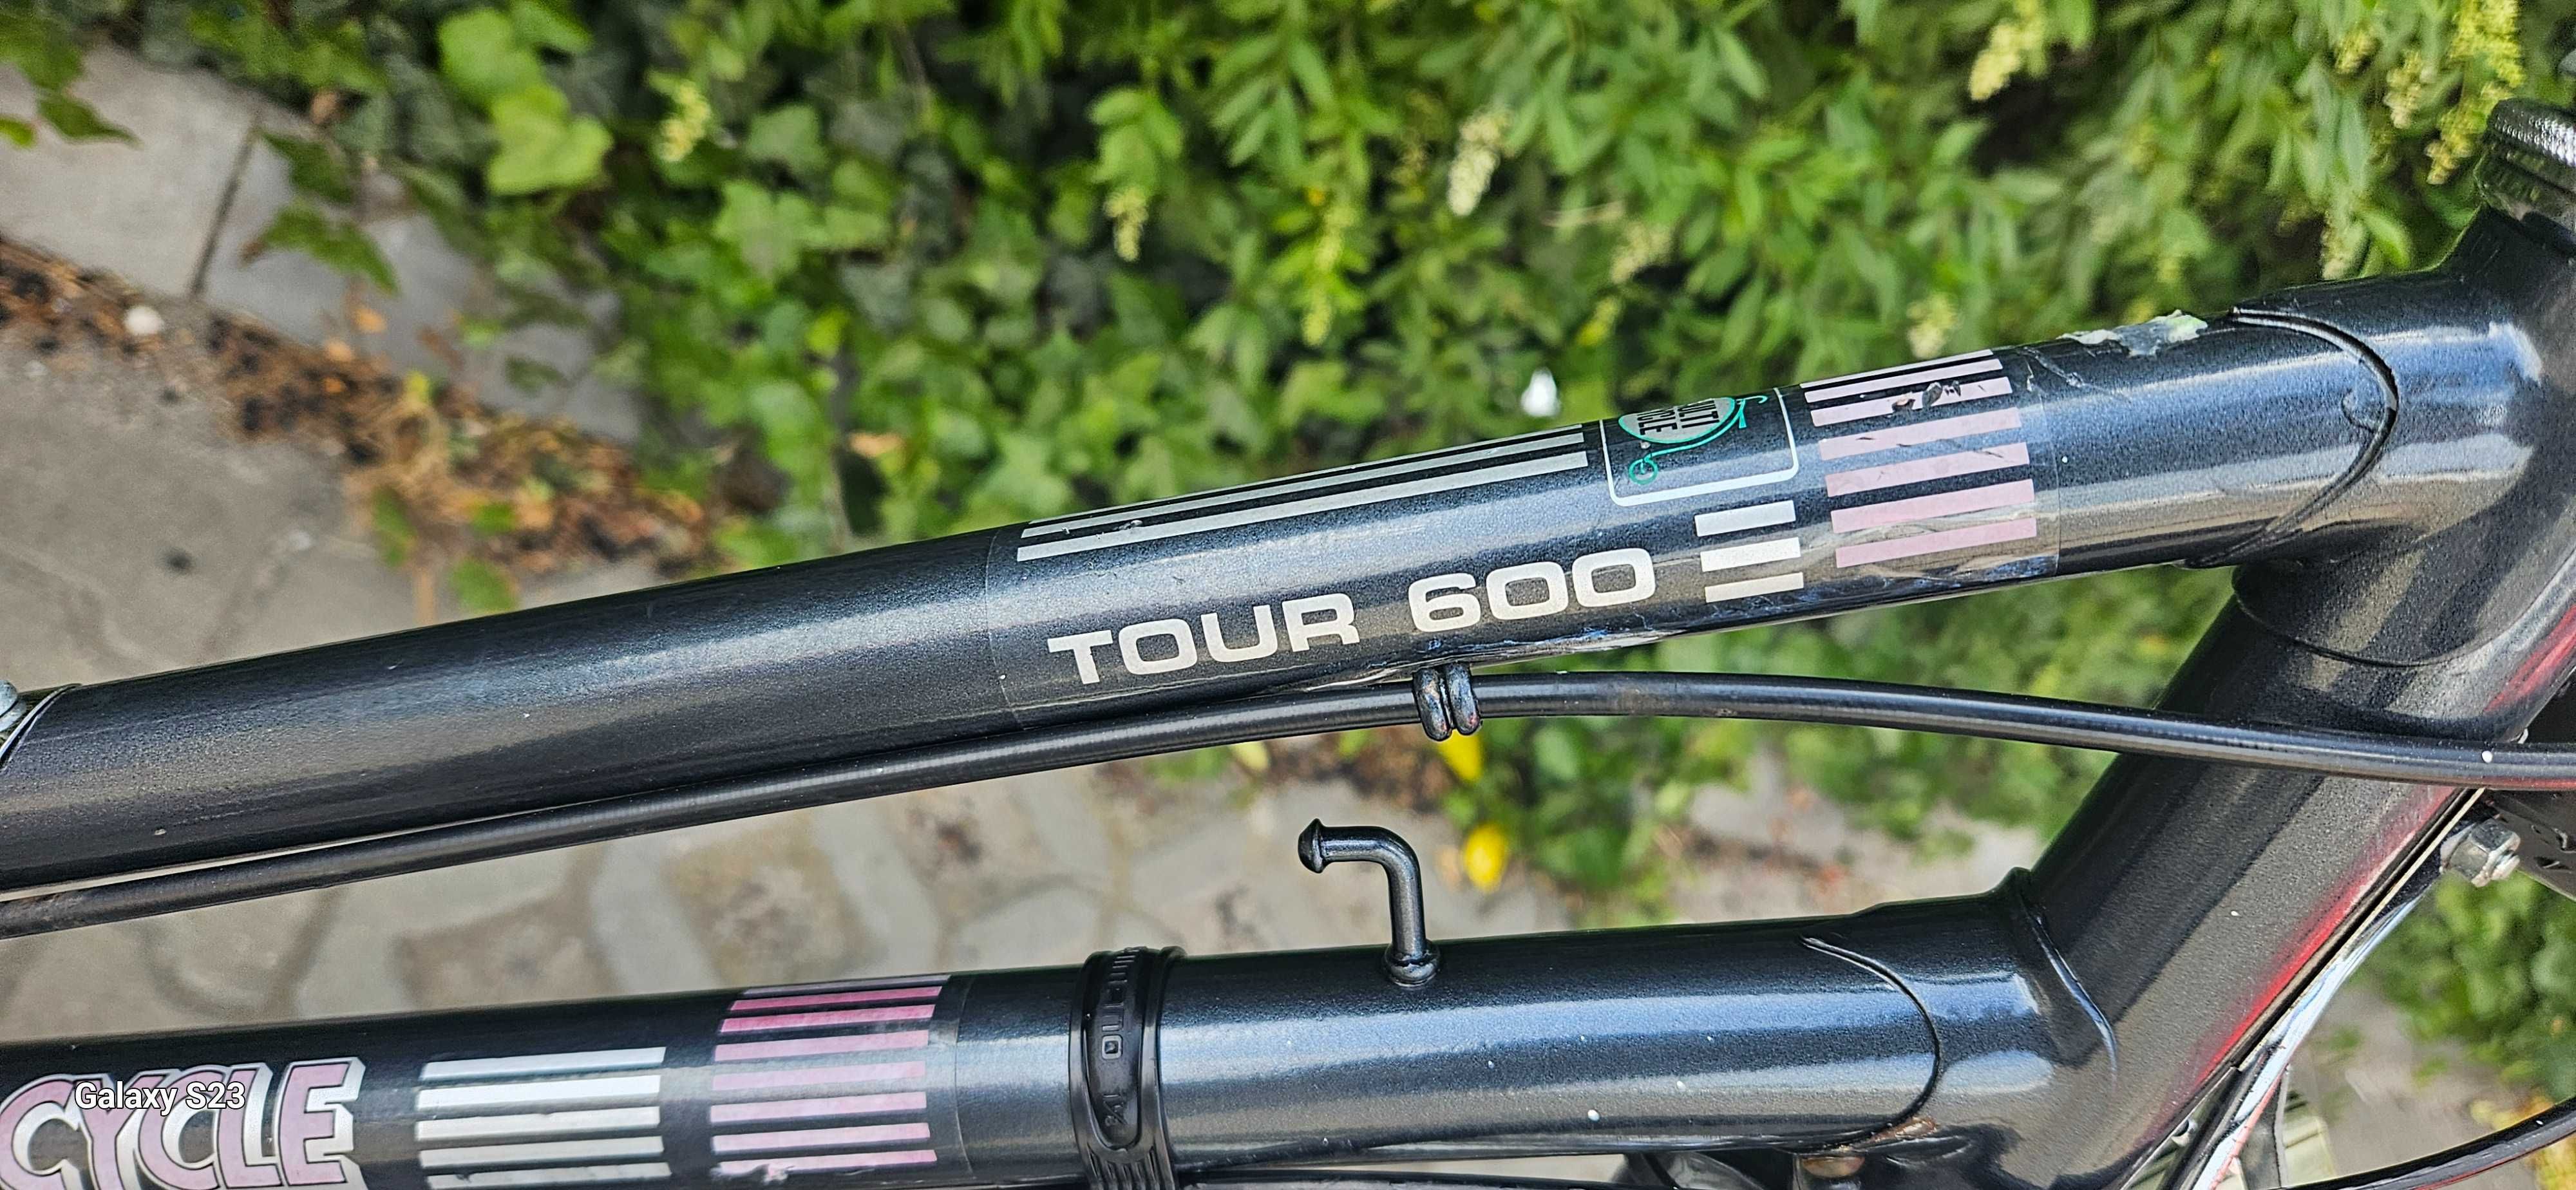 Holenderski rower damski multicykle tour 600.